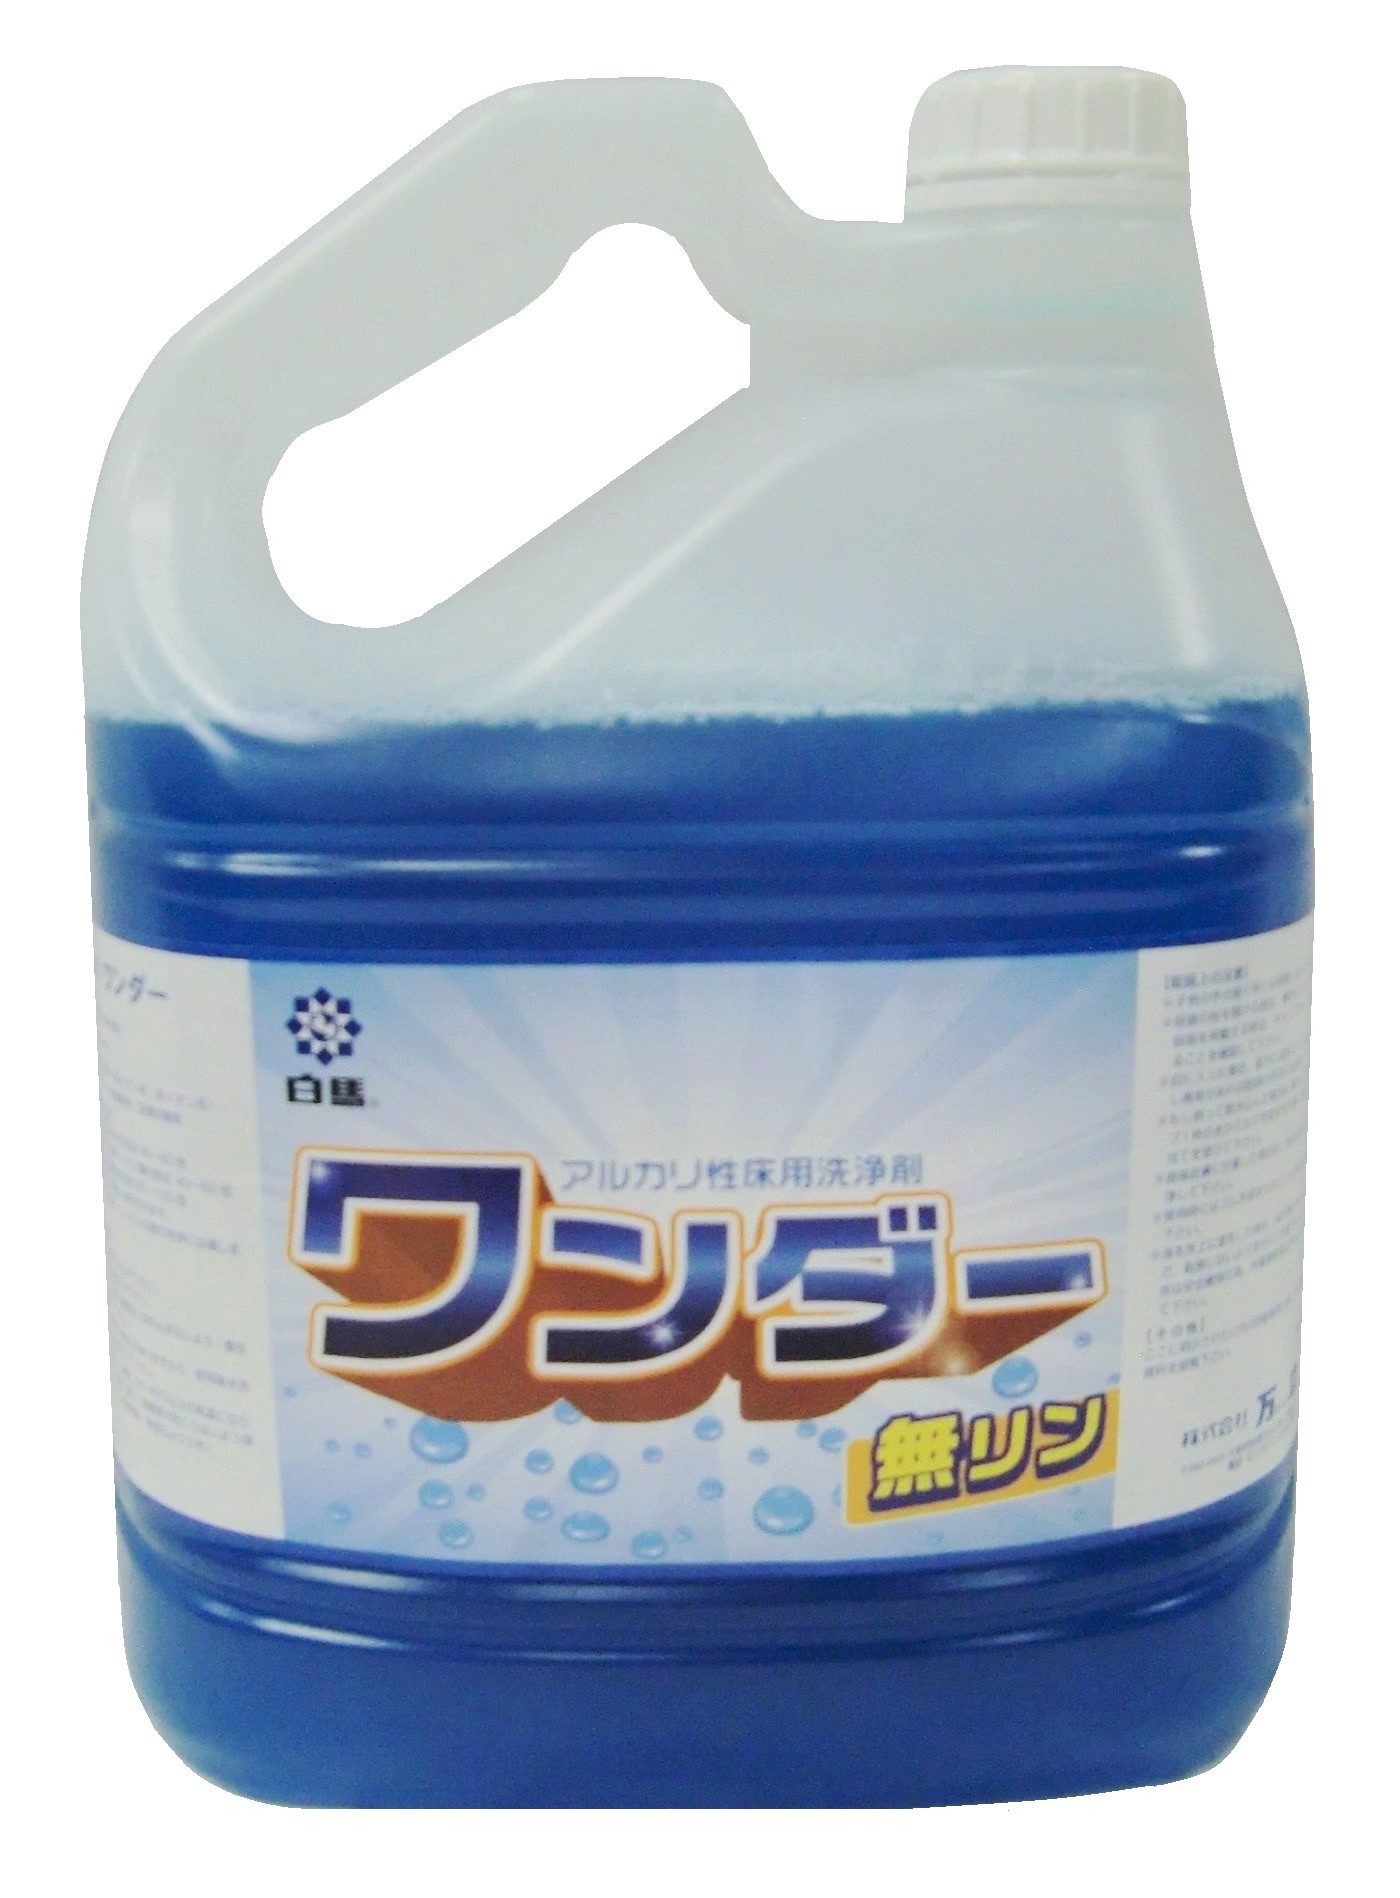 Hakuba Wonder 4L  Detergent all-purpose: low-foaming